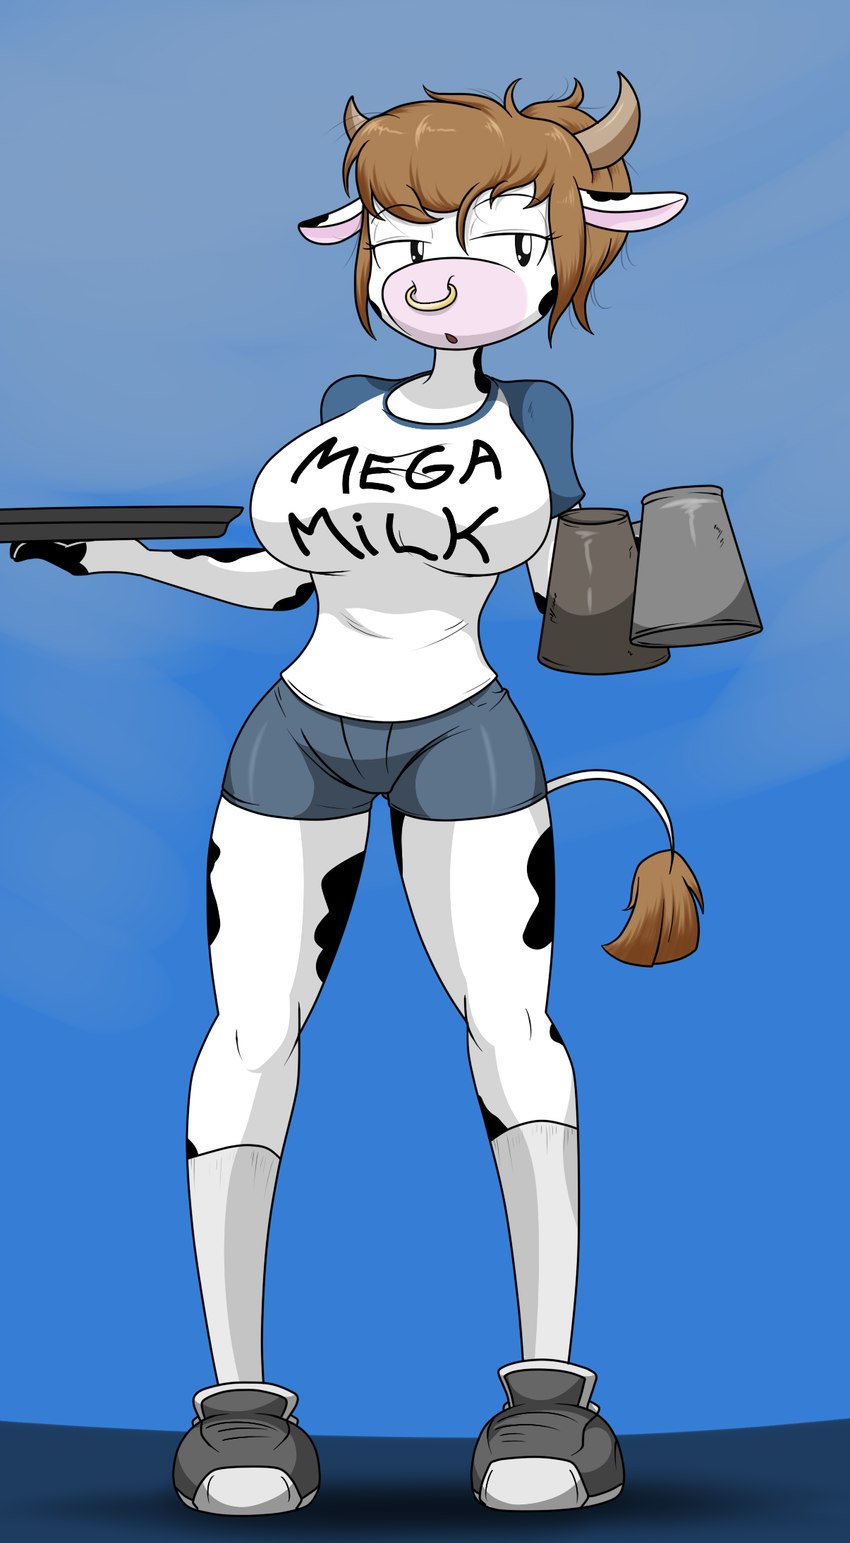 bessie (mega milk) created by sandwich-anomaly